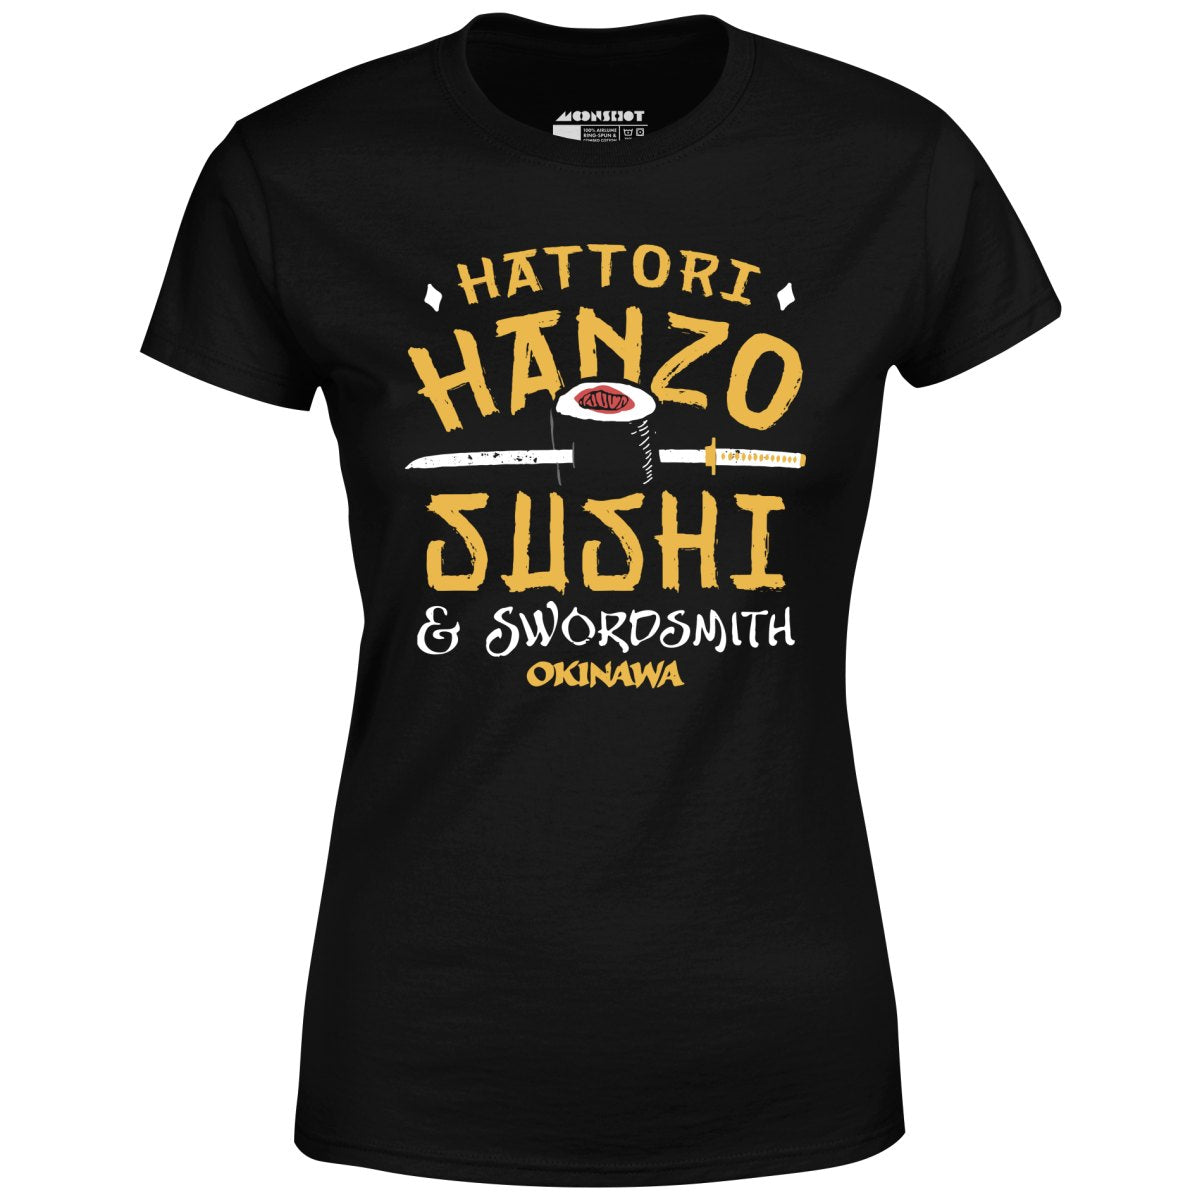 Hattori Hanzo Sushi & Swordsmith - Women's T-Shirt